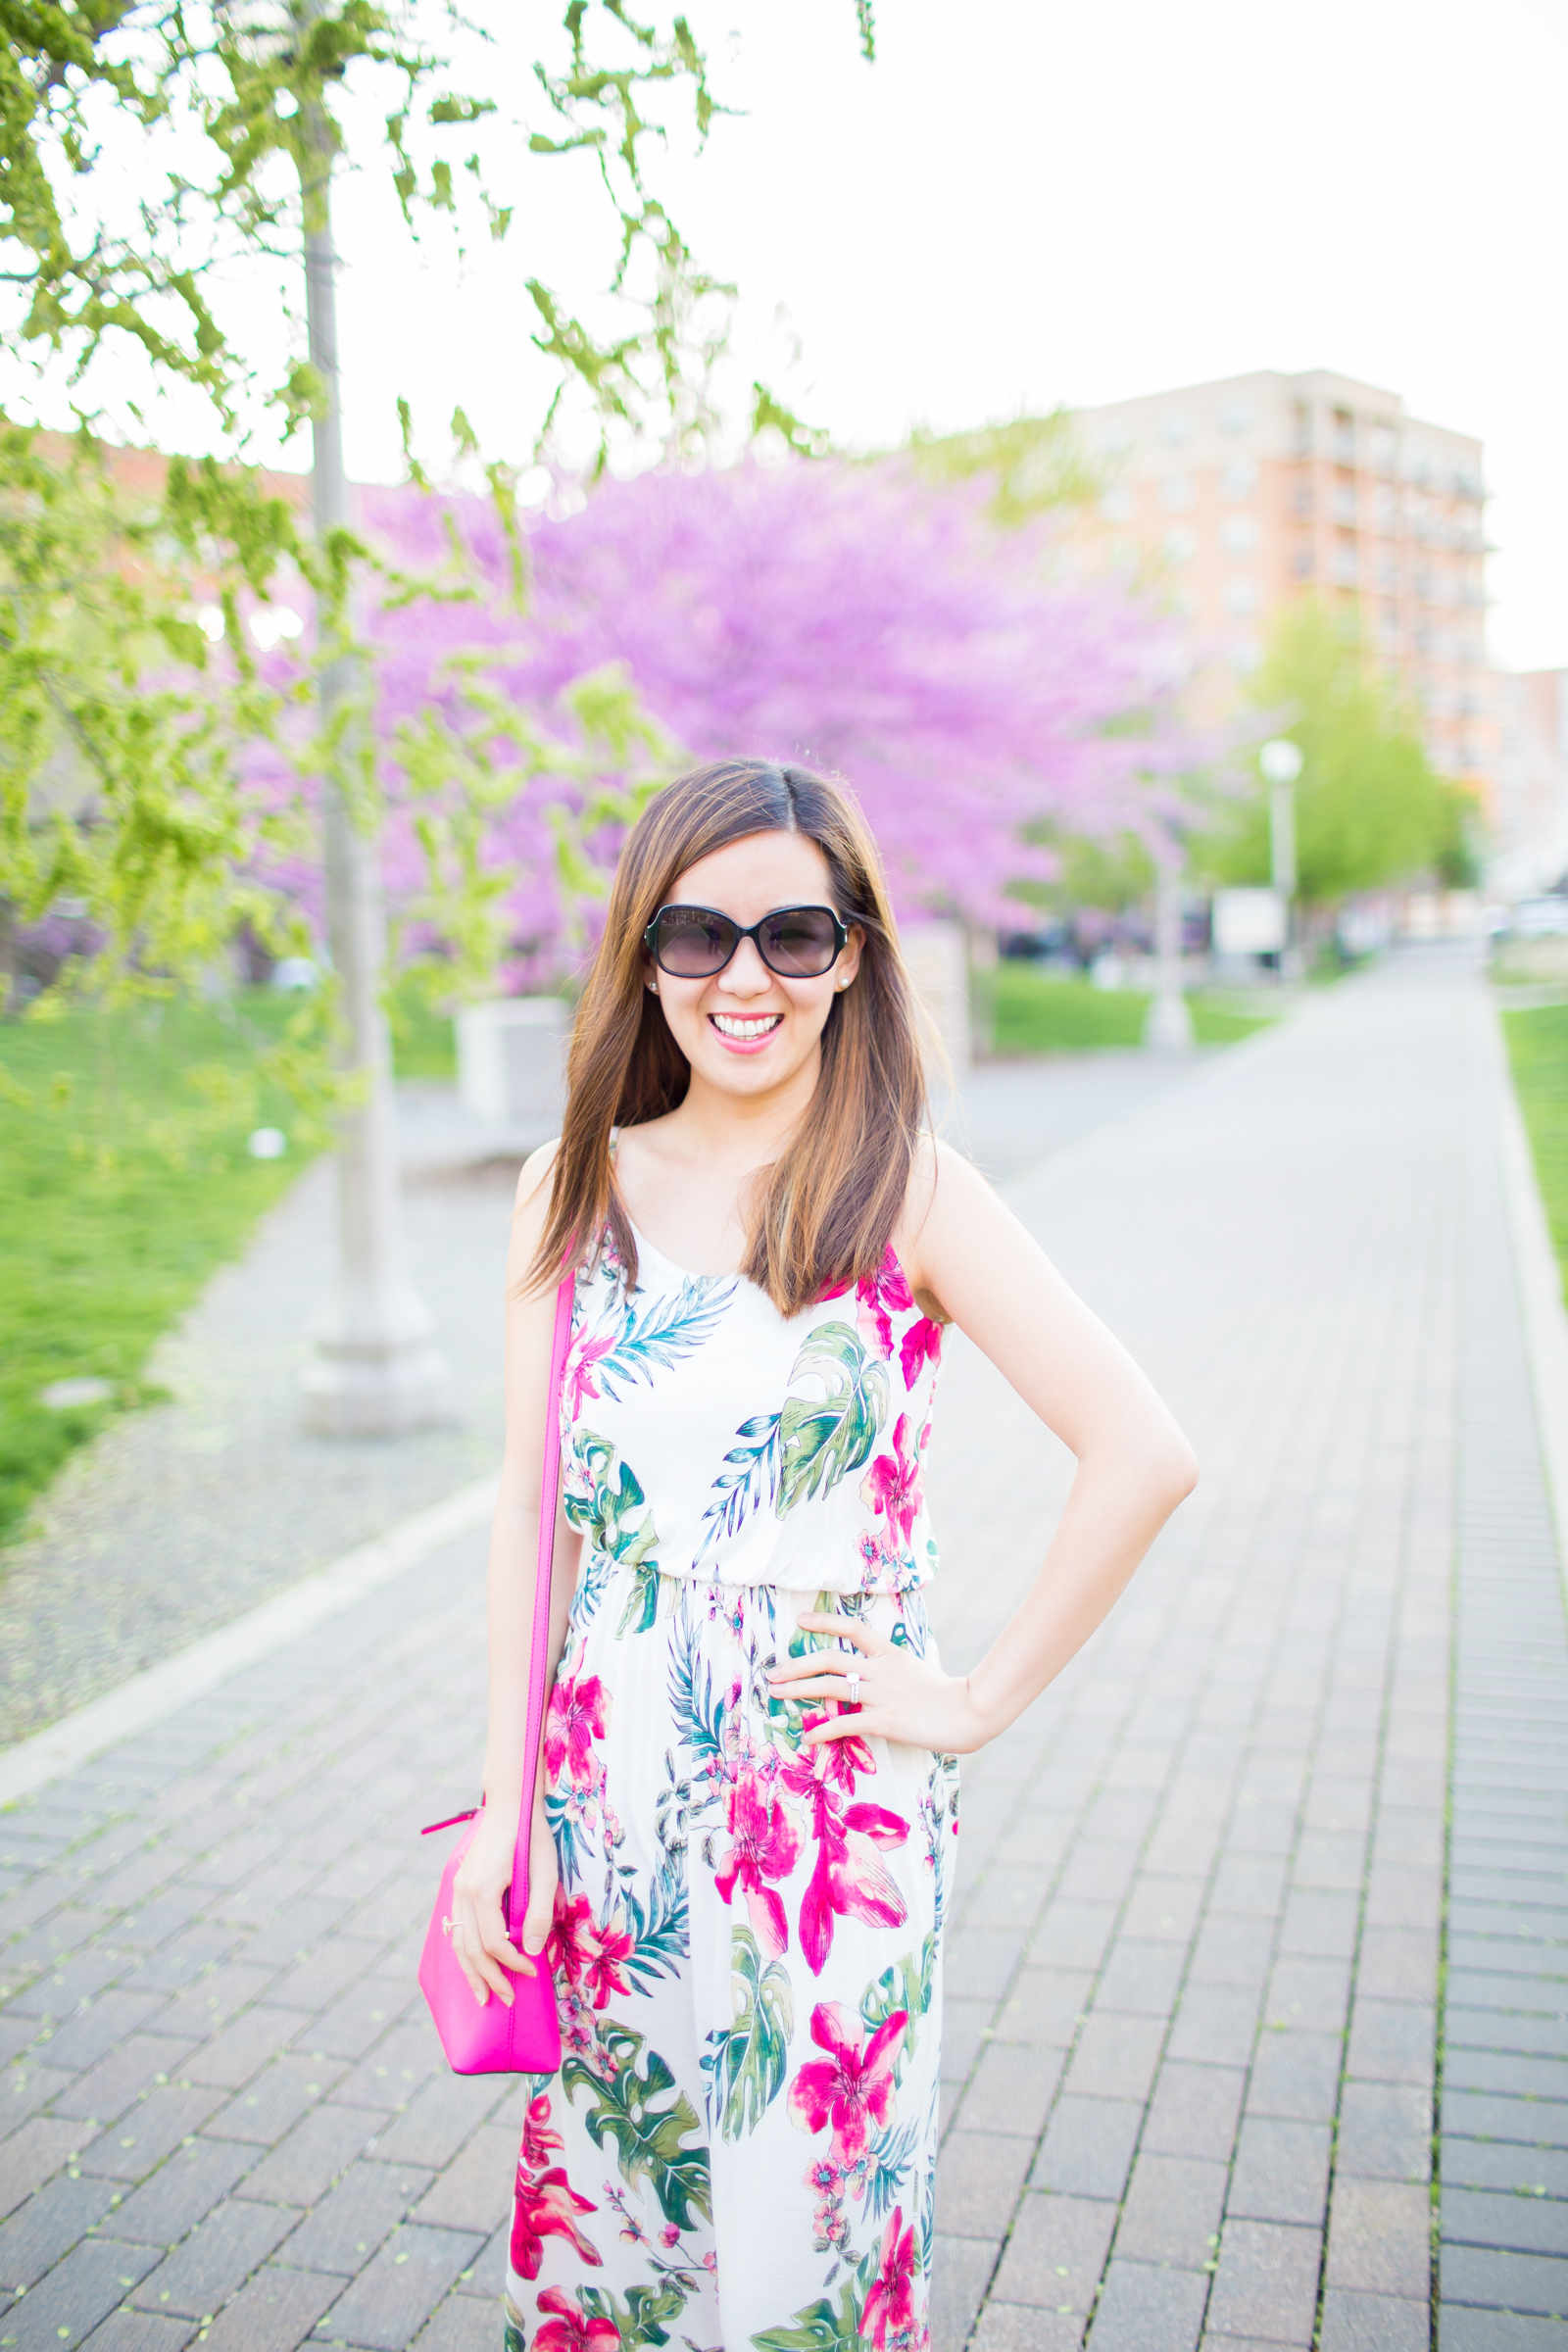 White Floral Knit Maxi Dress - Fashion & Lifestyle Blog by Tia Perciballi